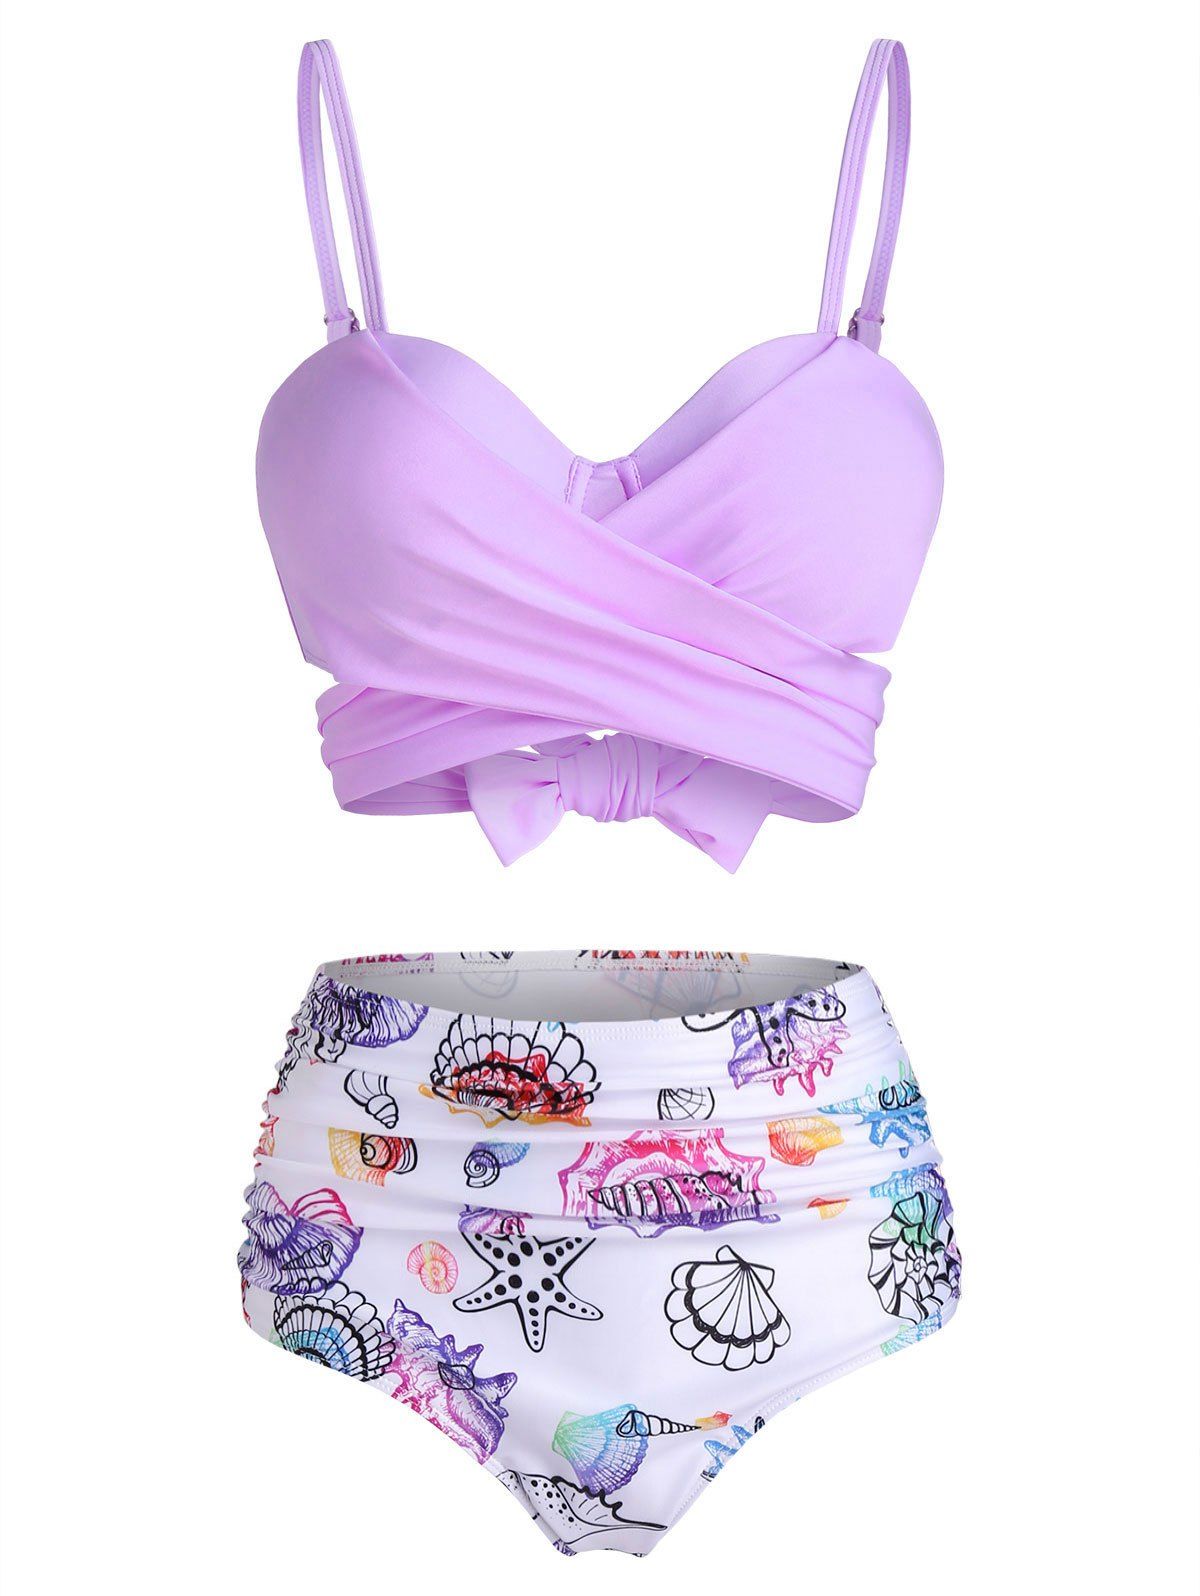 Shell Starfish Print Padded Wrap Bikini Set - LIGHT PURPLE 3XL